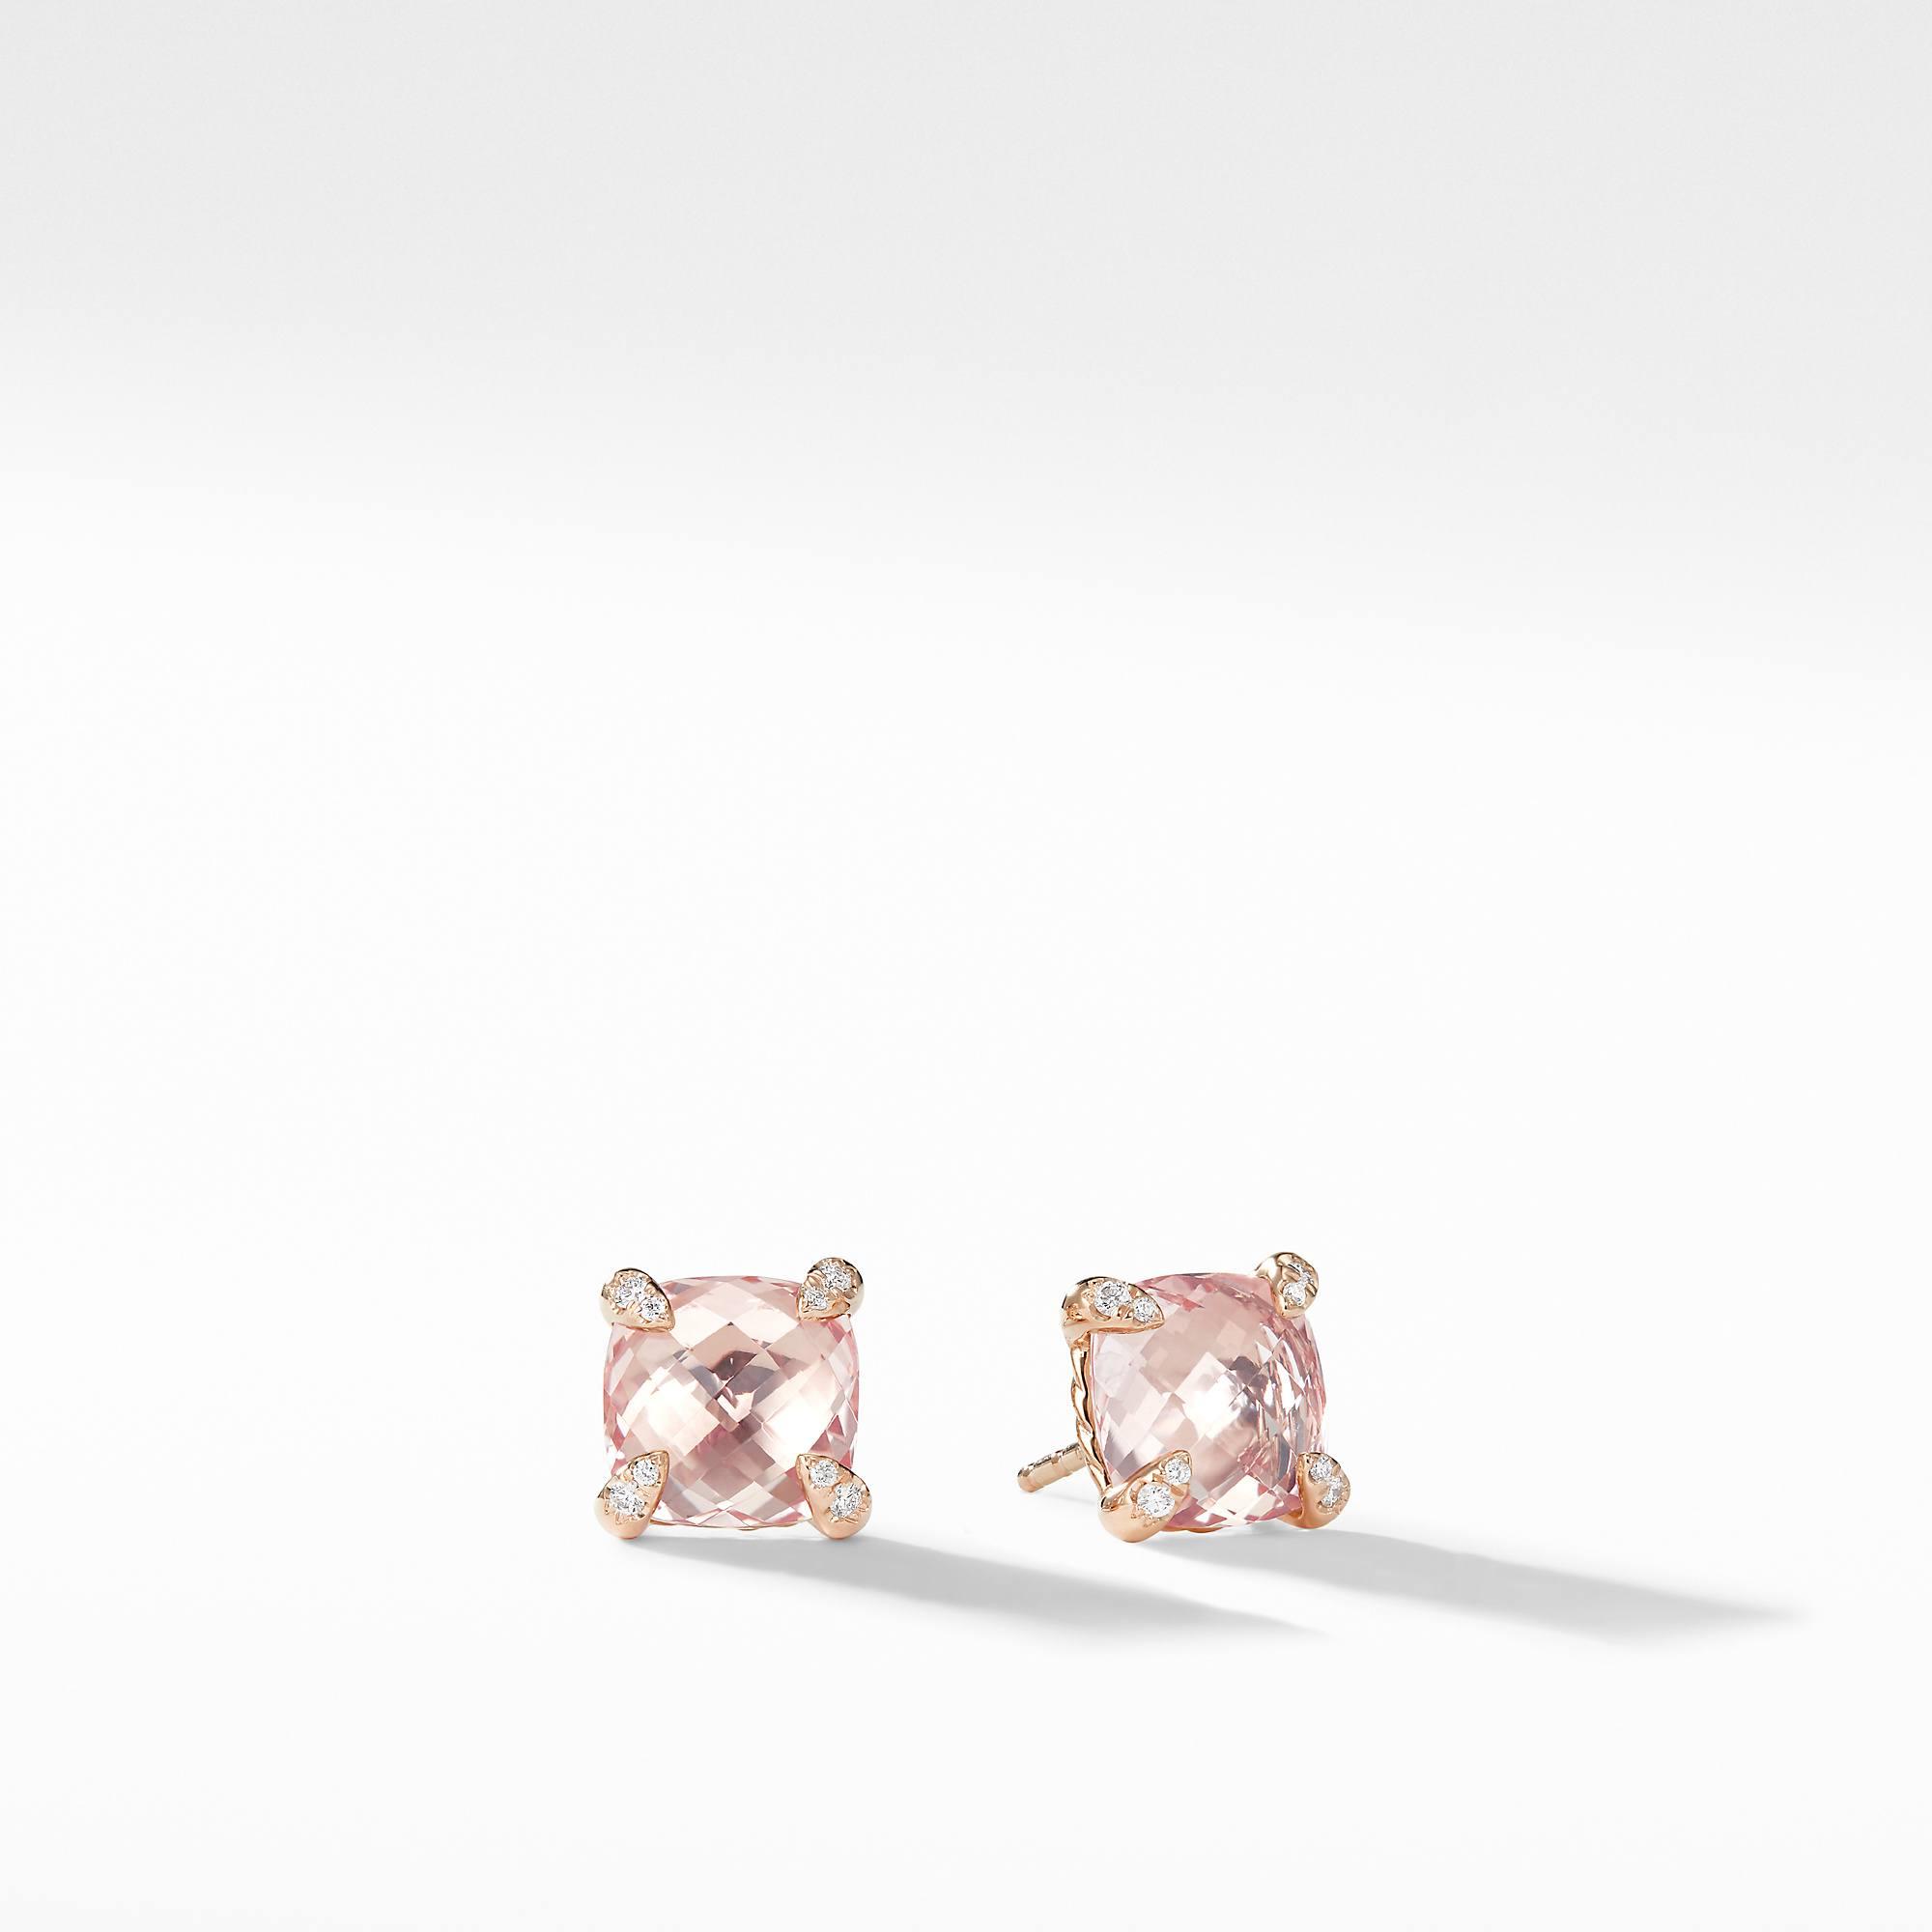 David Yurman Chatelaine Stud Earrings with Morganite and Diamonds in 18k Rose Gold